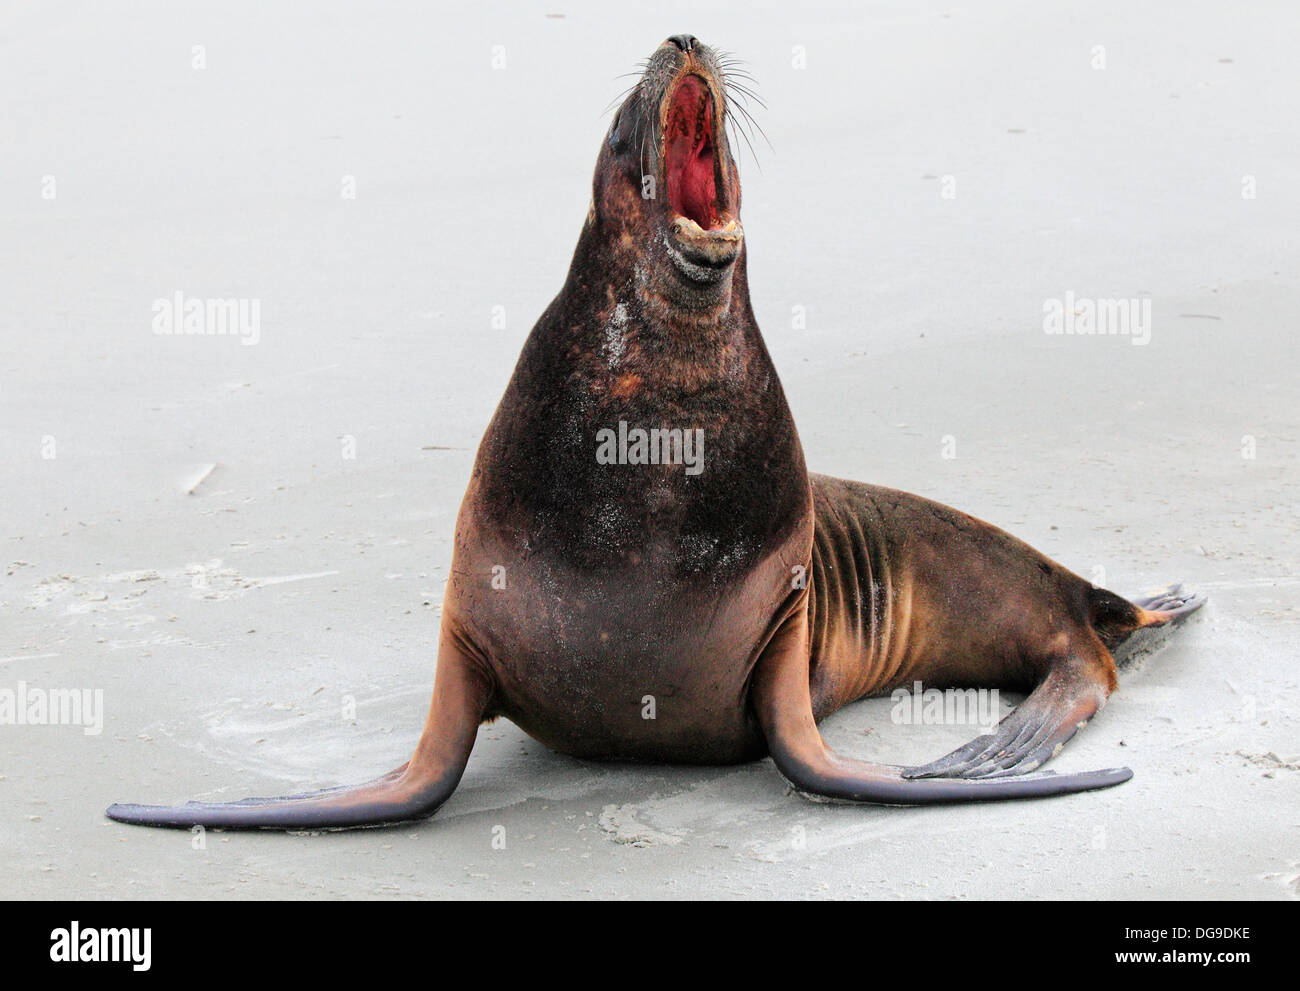 Nuova Zelanda Sea Lion (Phocarctos hookeri) Foto Stock